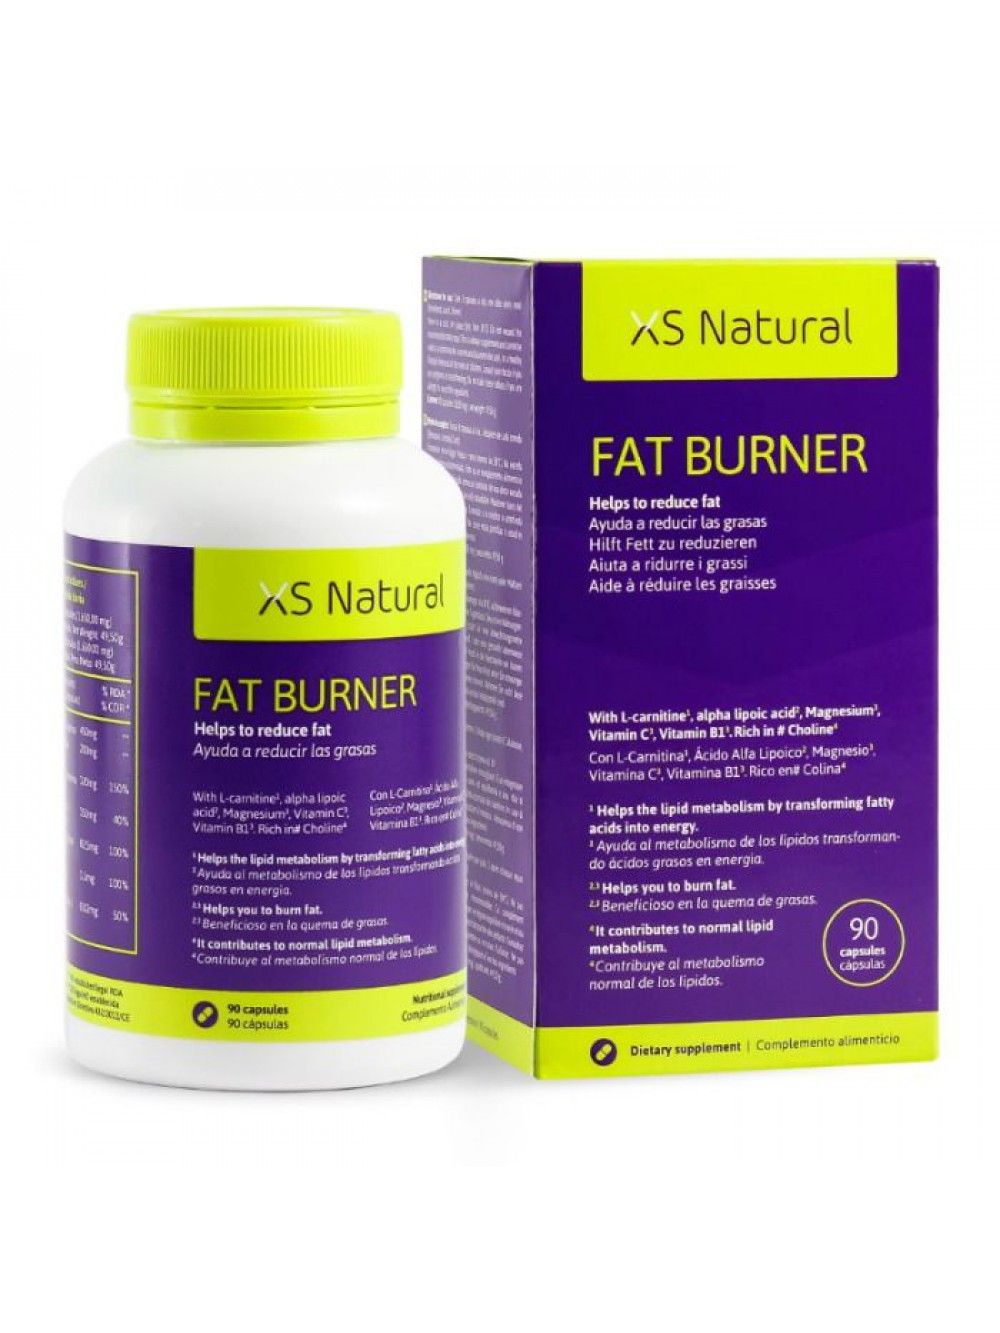 XS Natural Fat Burner: Capsule brucia-grassi cha aiutano a perdere peso